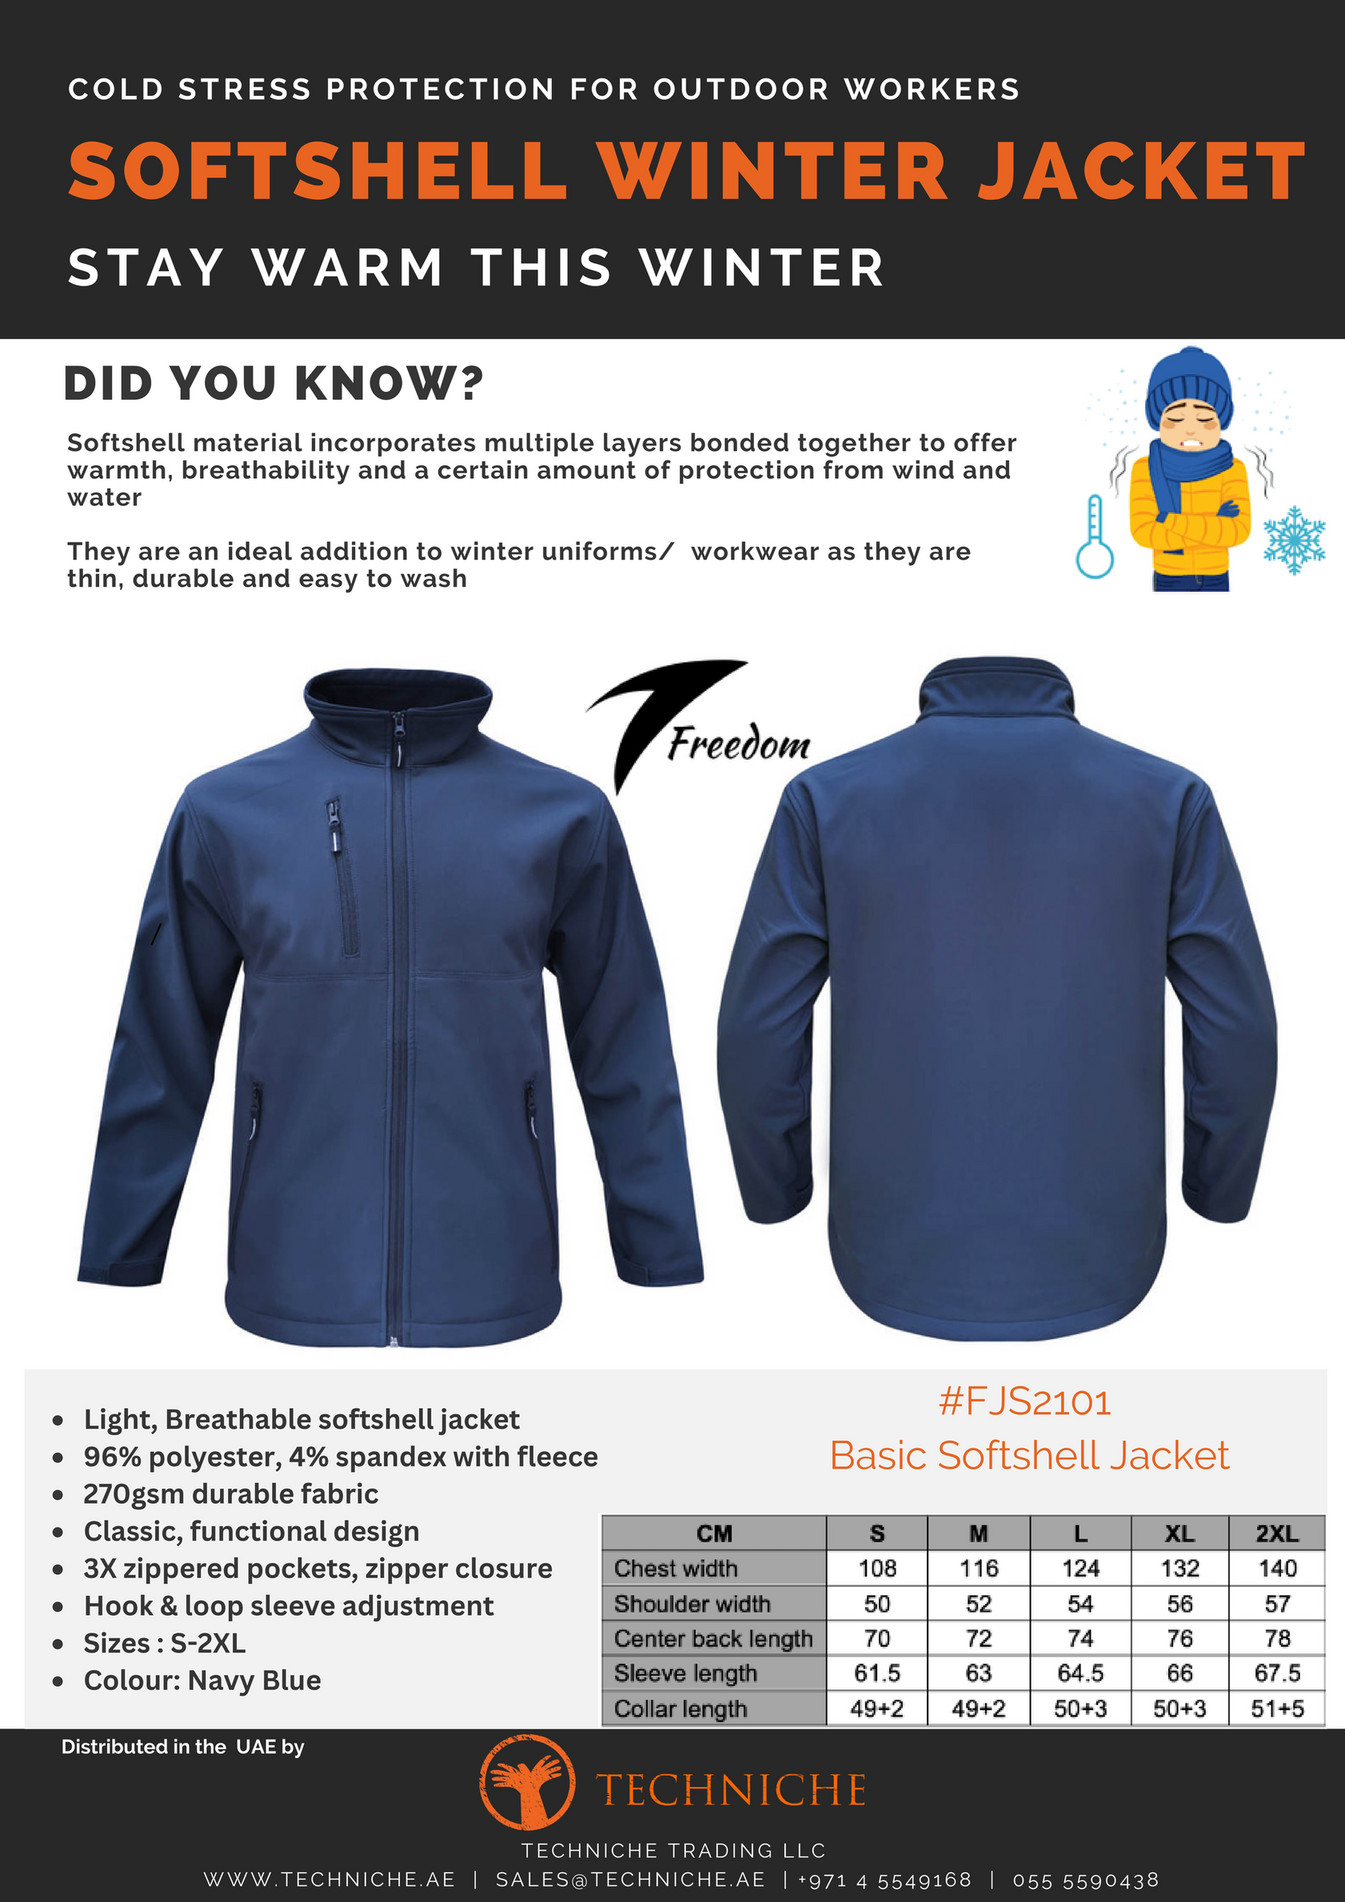 TechNiche Trading LLC - Softshell Winter Jacket_FJS2101 - Page 1 ...